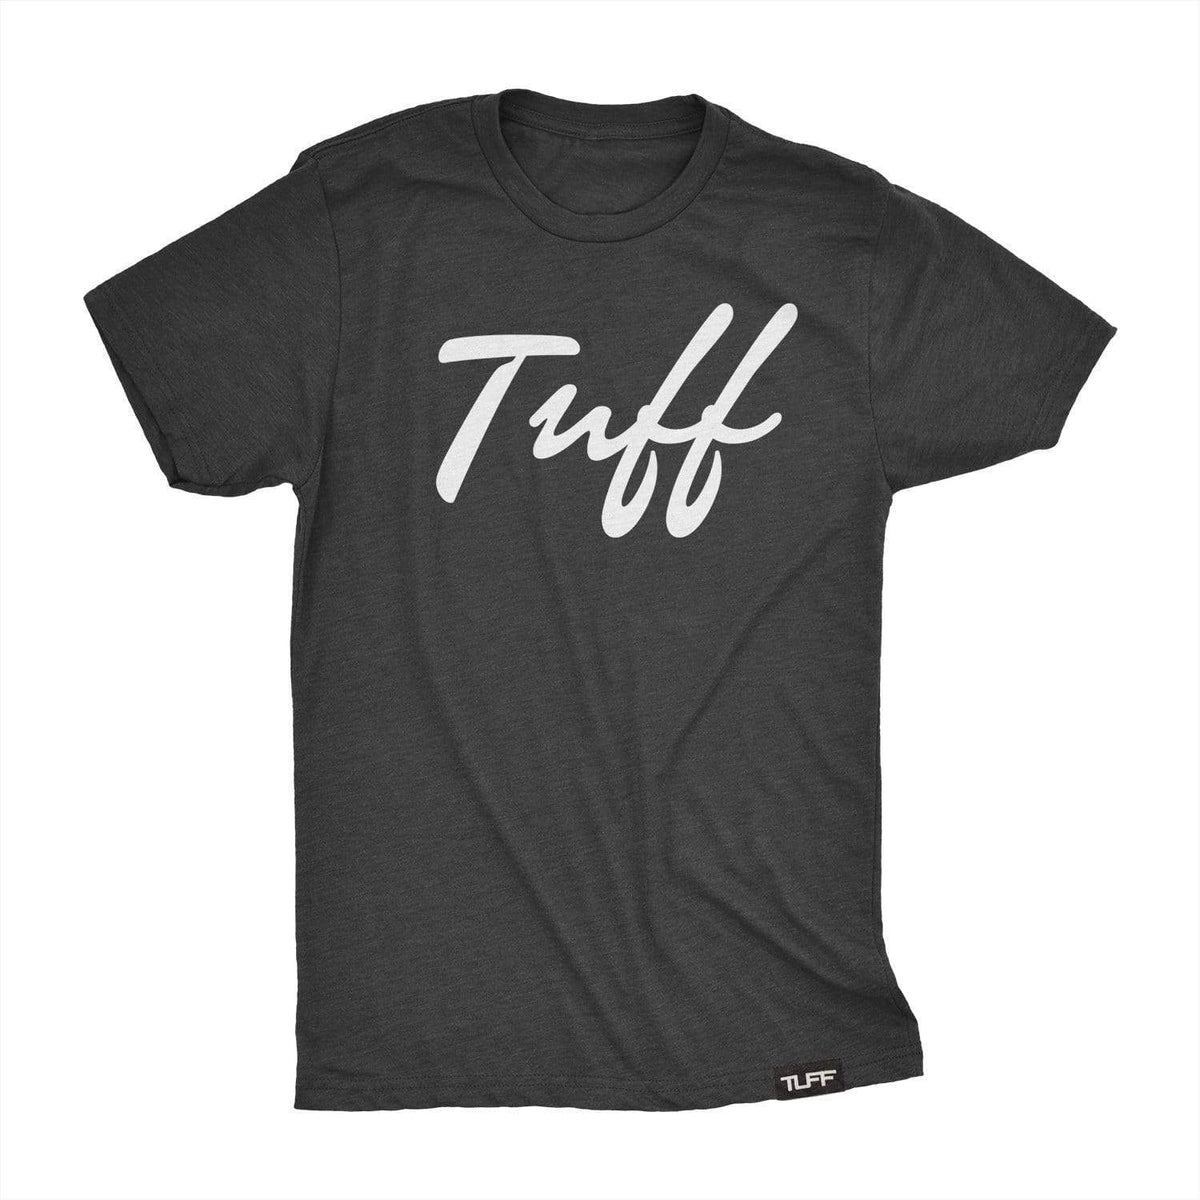 TUFF Thin Script Tee S / Black TuffWraps.com